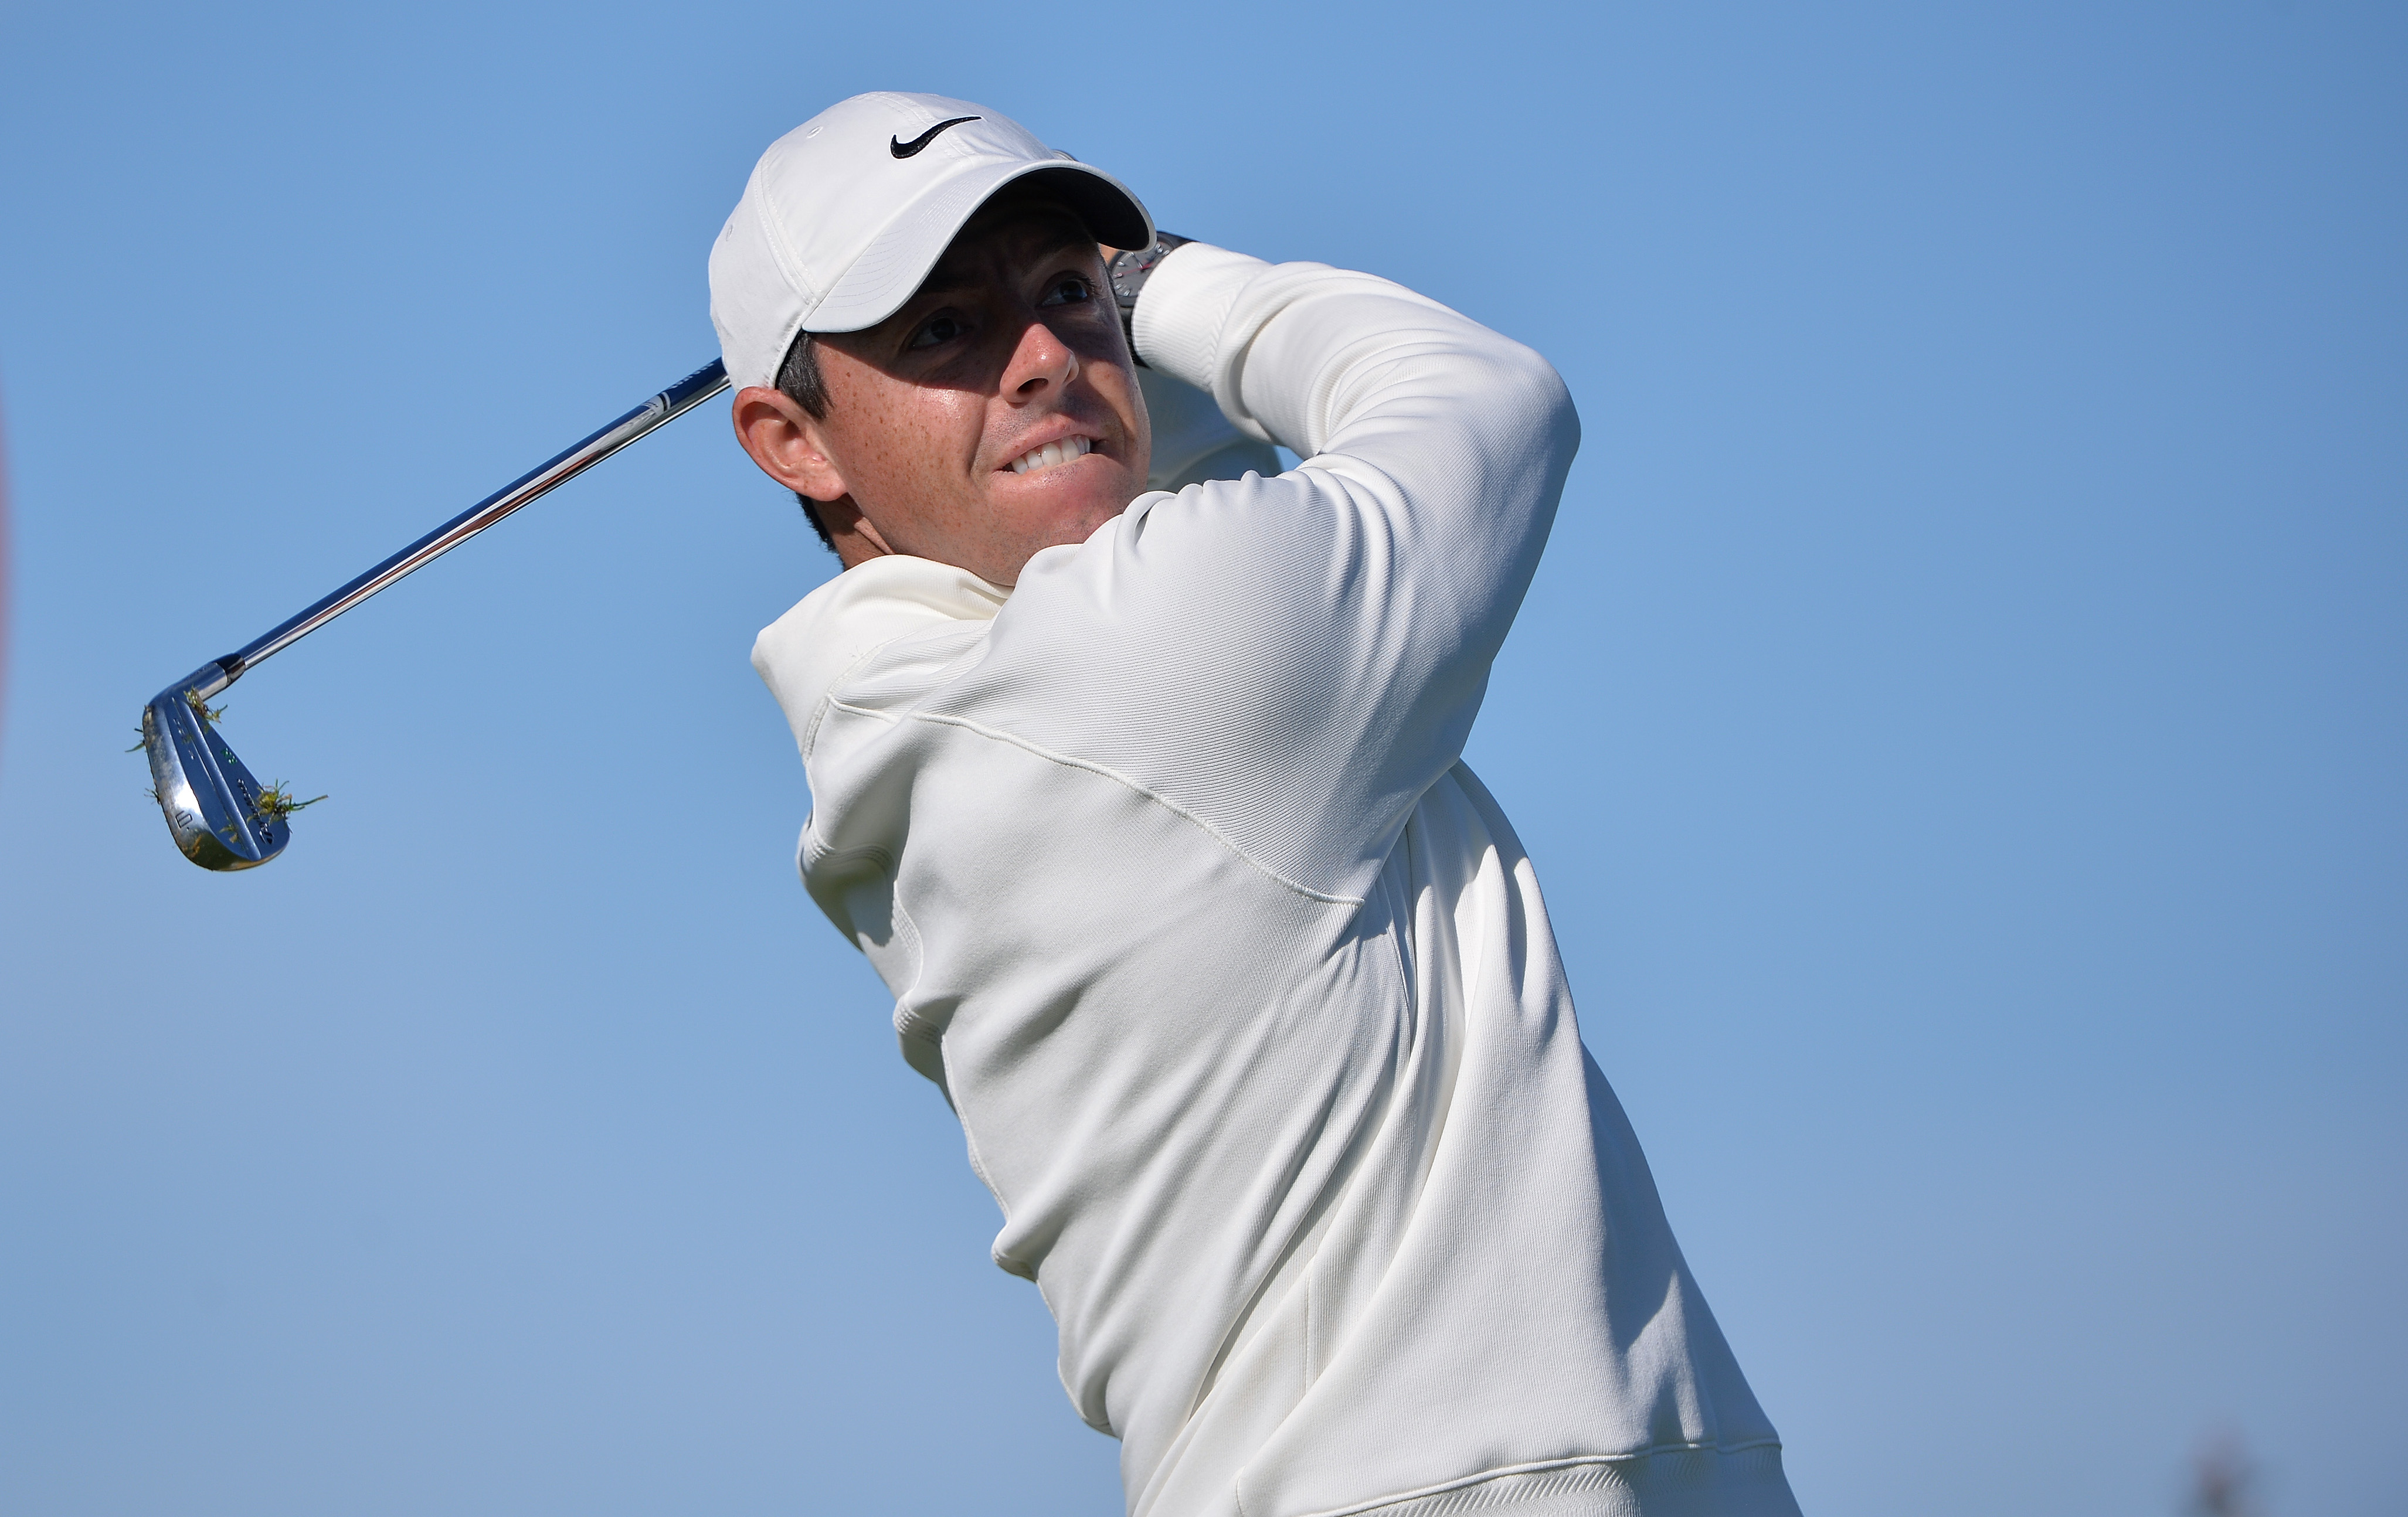 Rory McIlroy feels Premier Golf League would spark PGA Tour changes